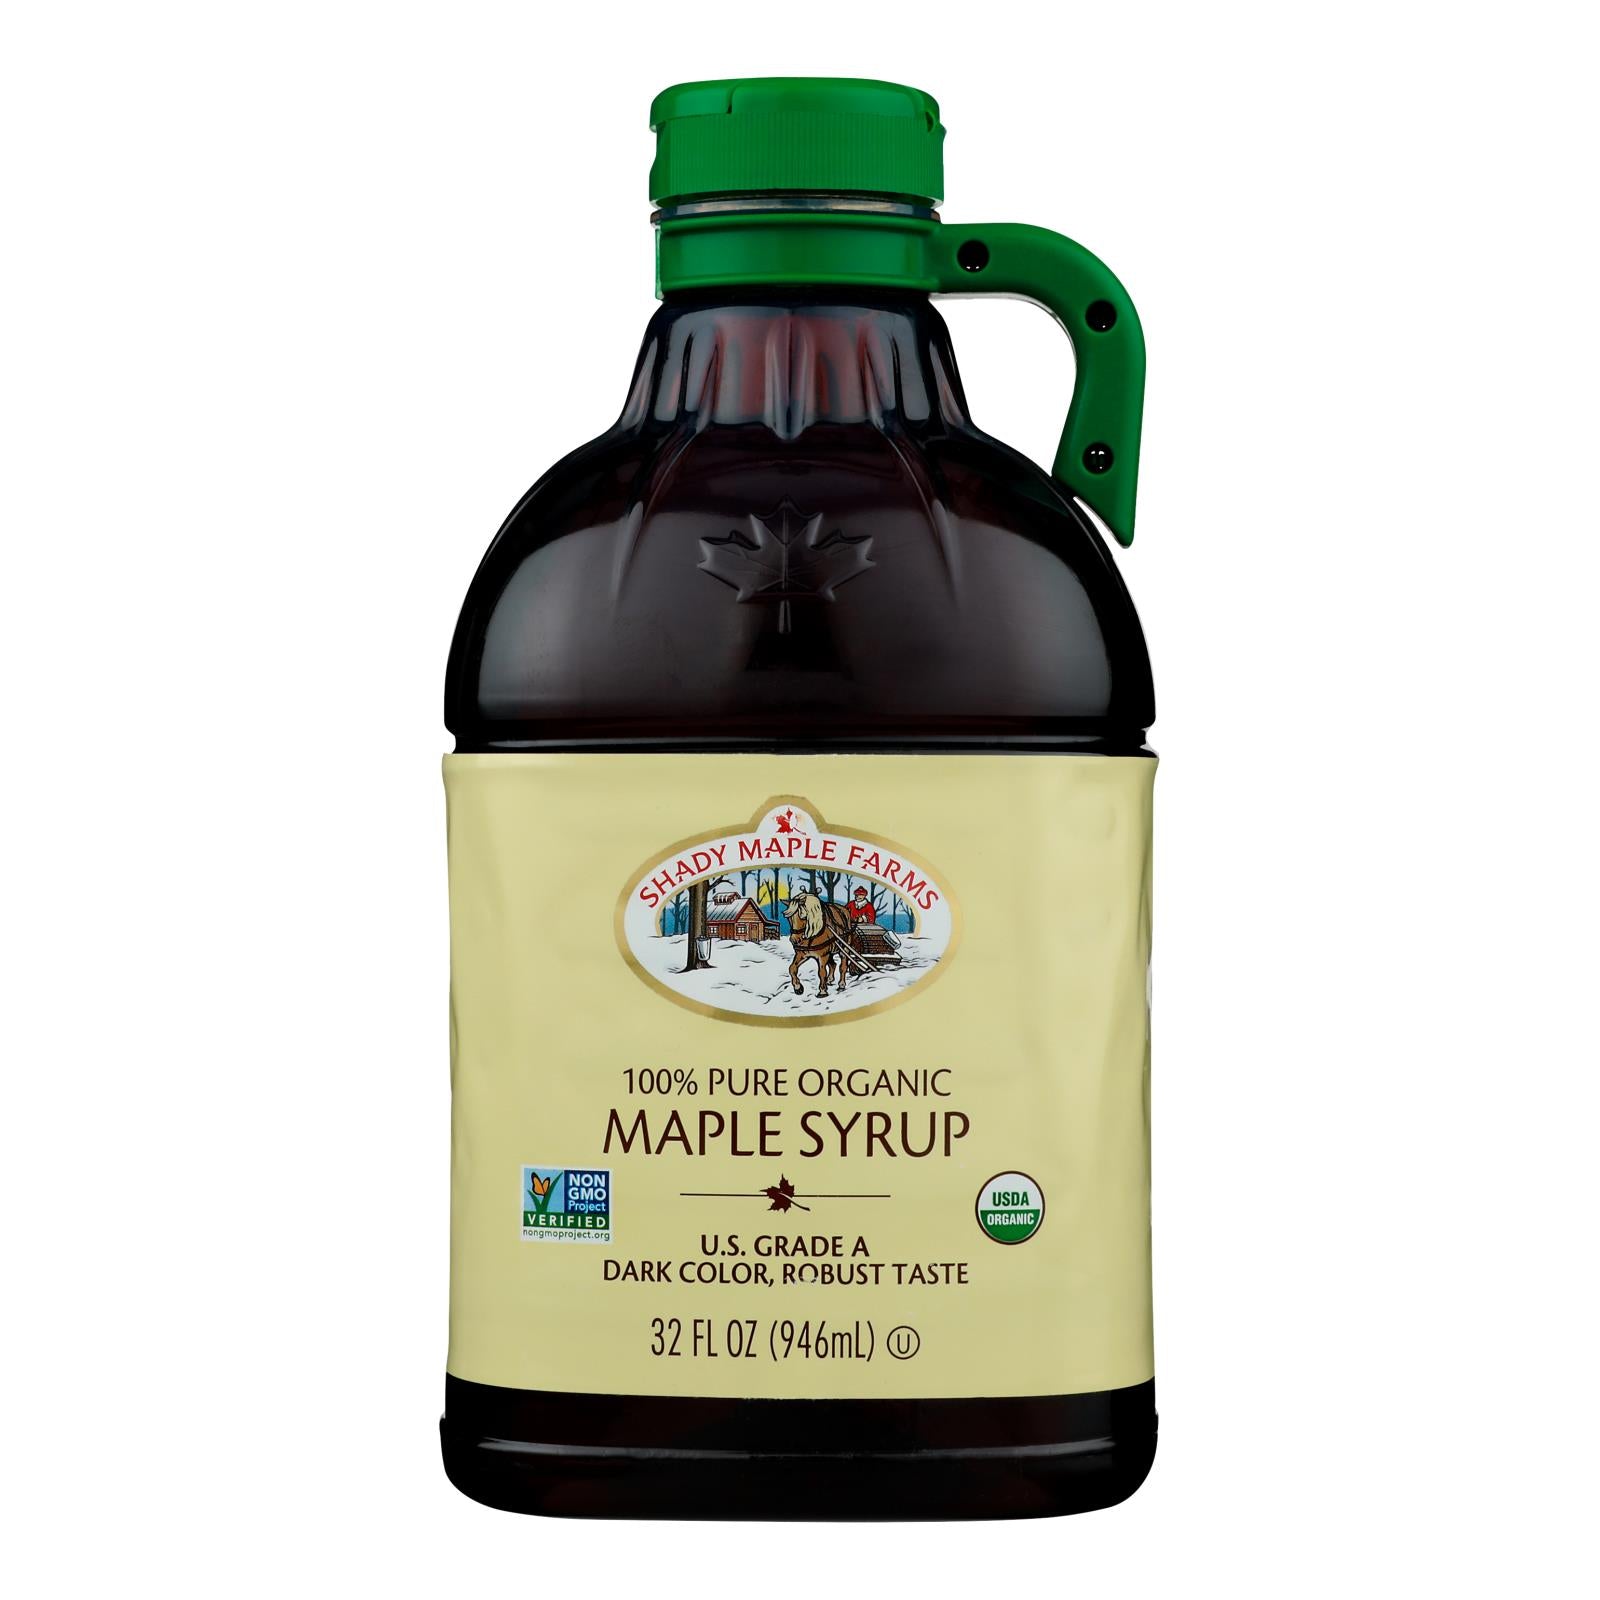 Shady Maple Farms 100 Percent Pure Organic Maple Syrup - Case of 6 - 32 Fl oz.